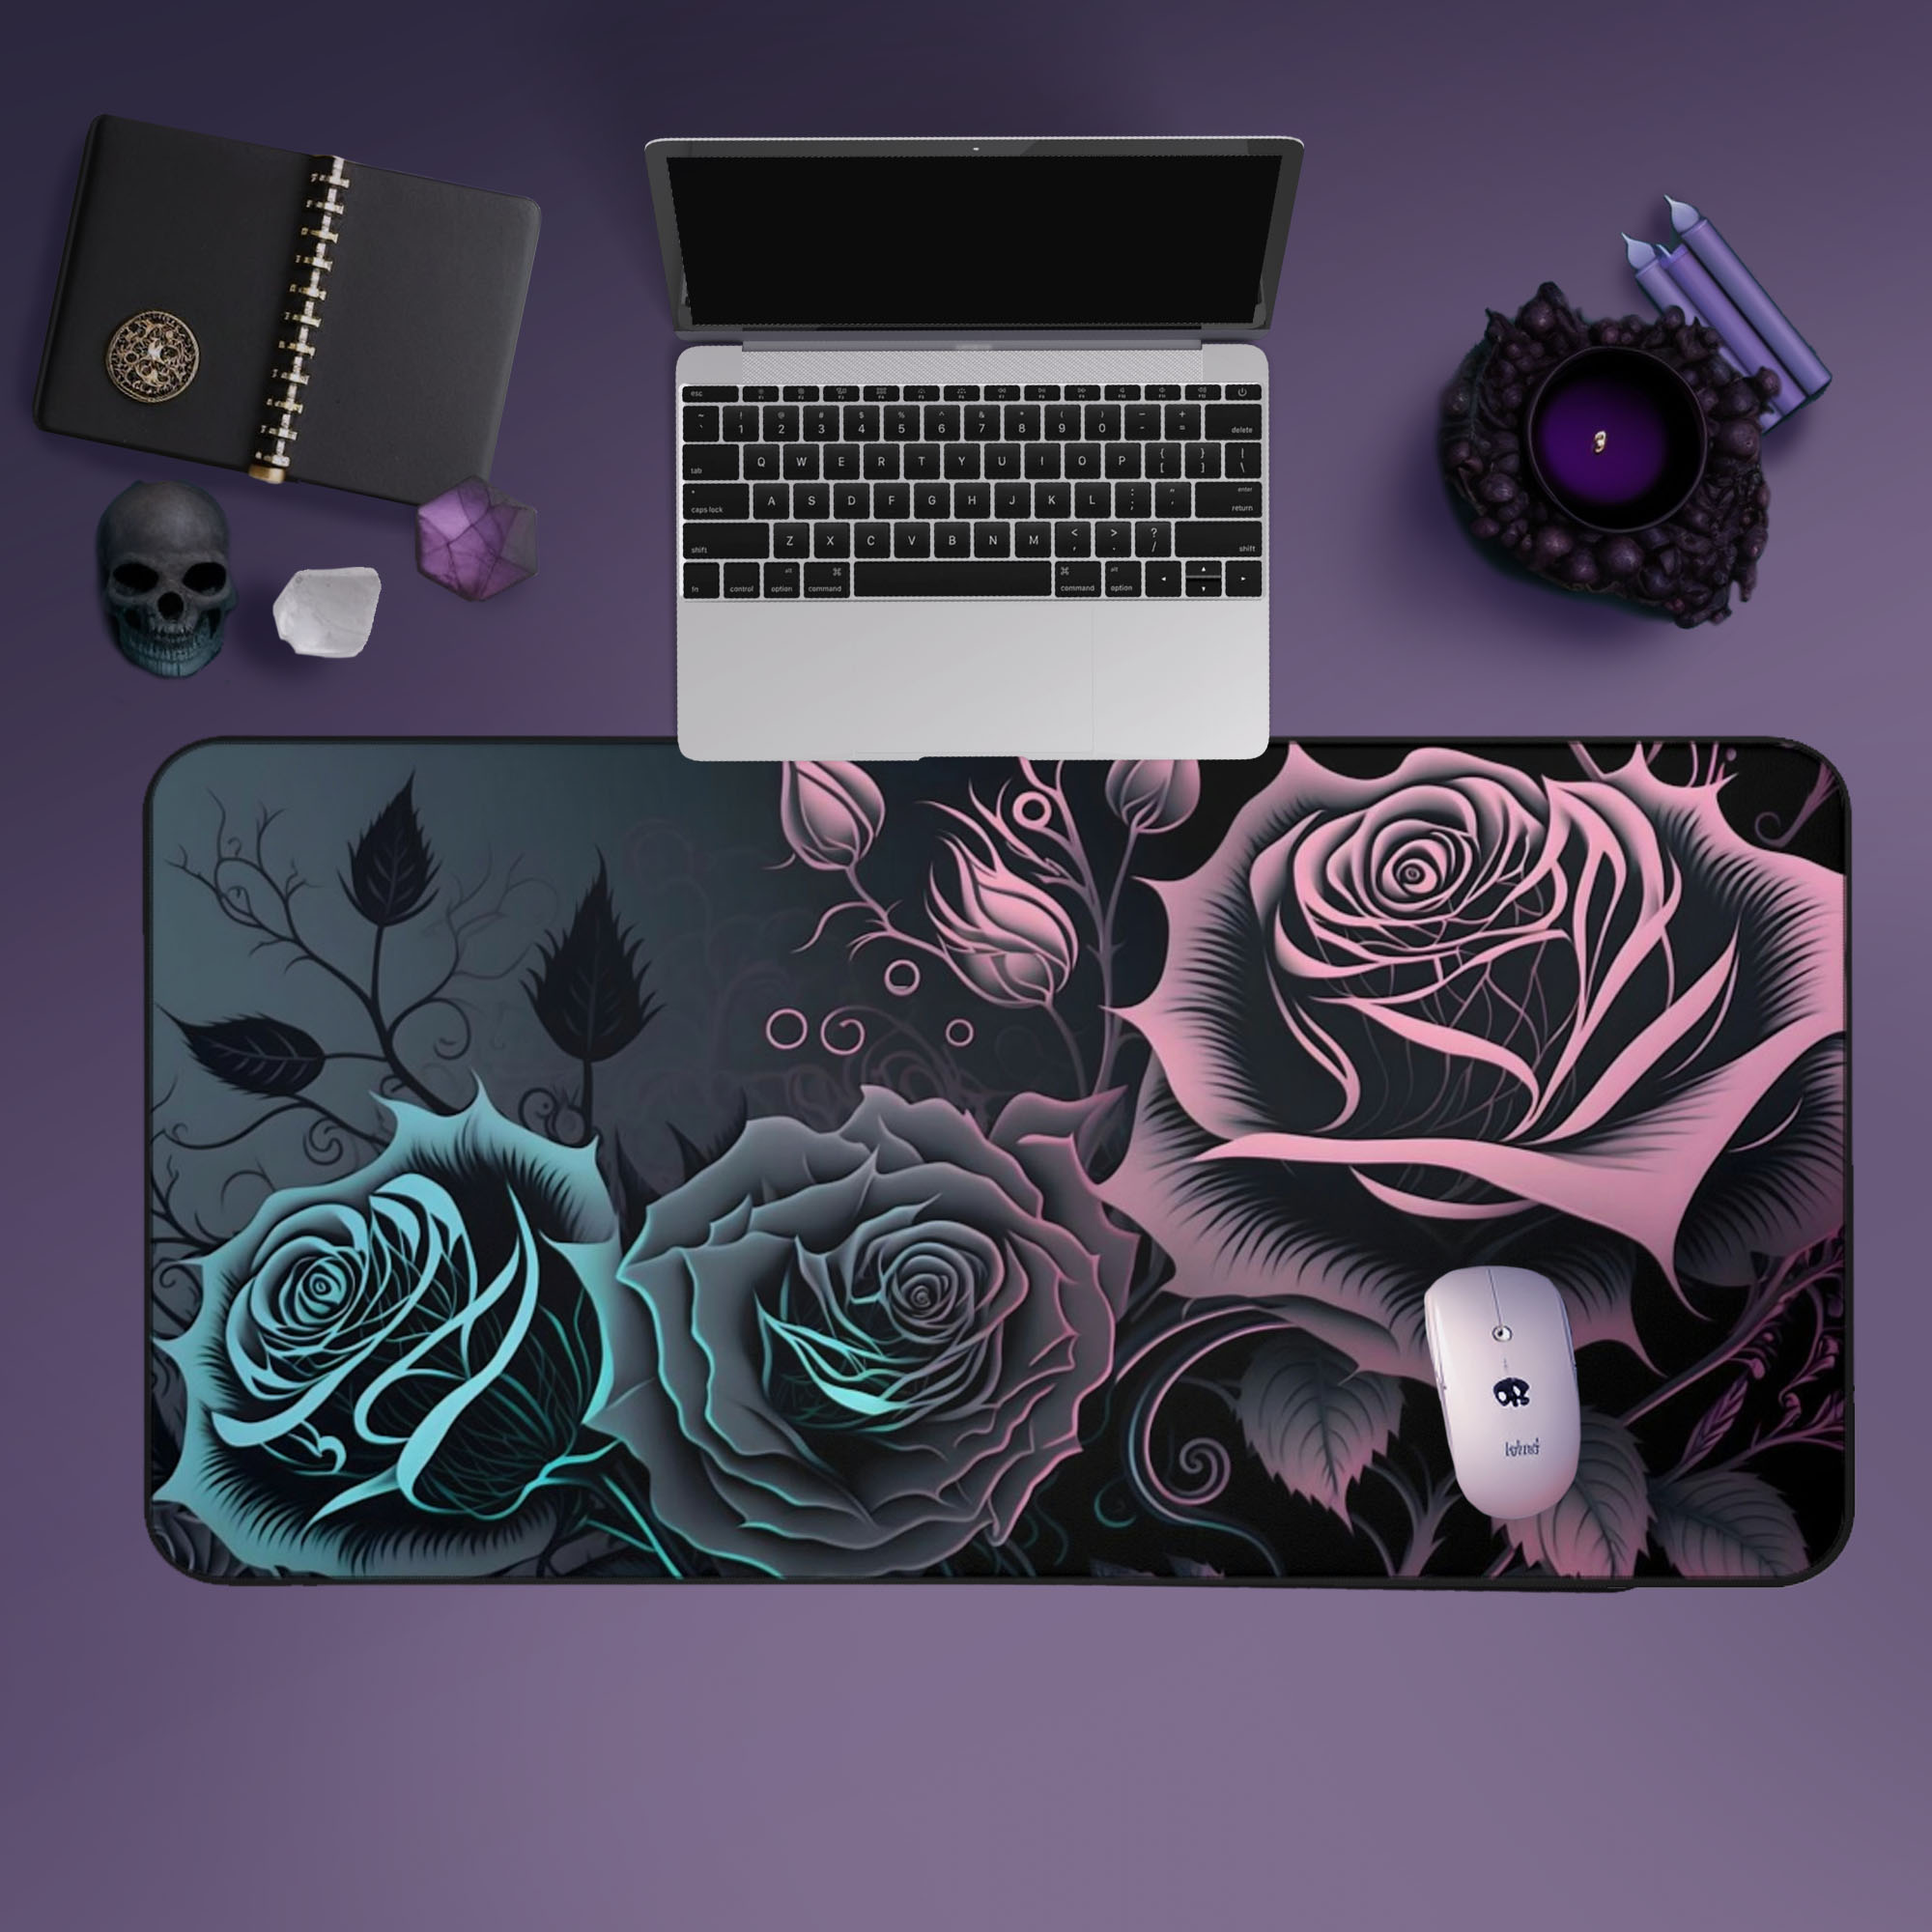 Pastel Goth Roses Desk Mat -